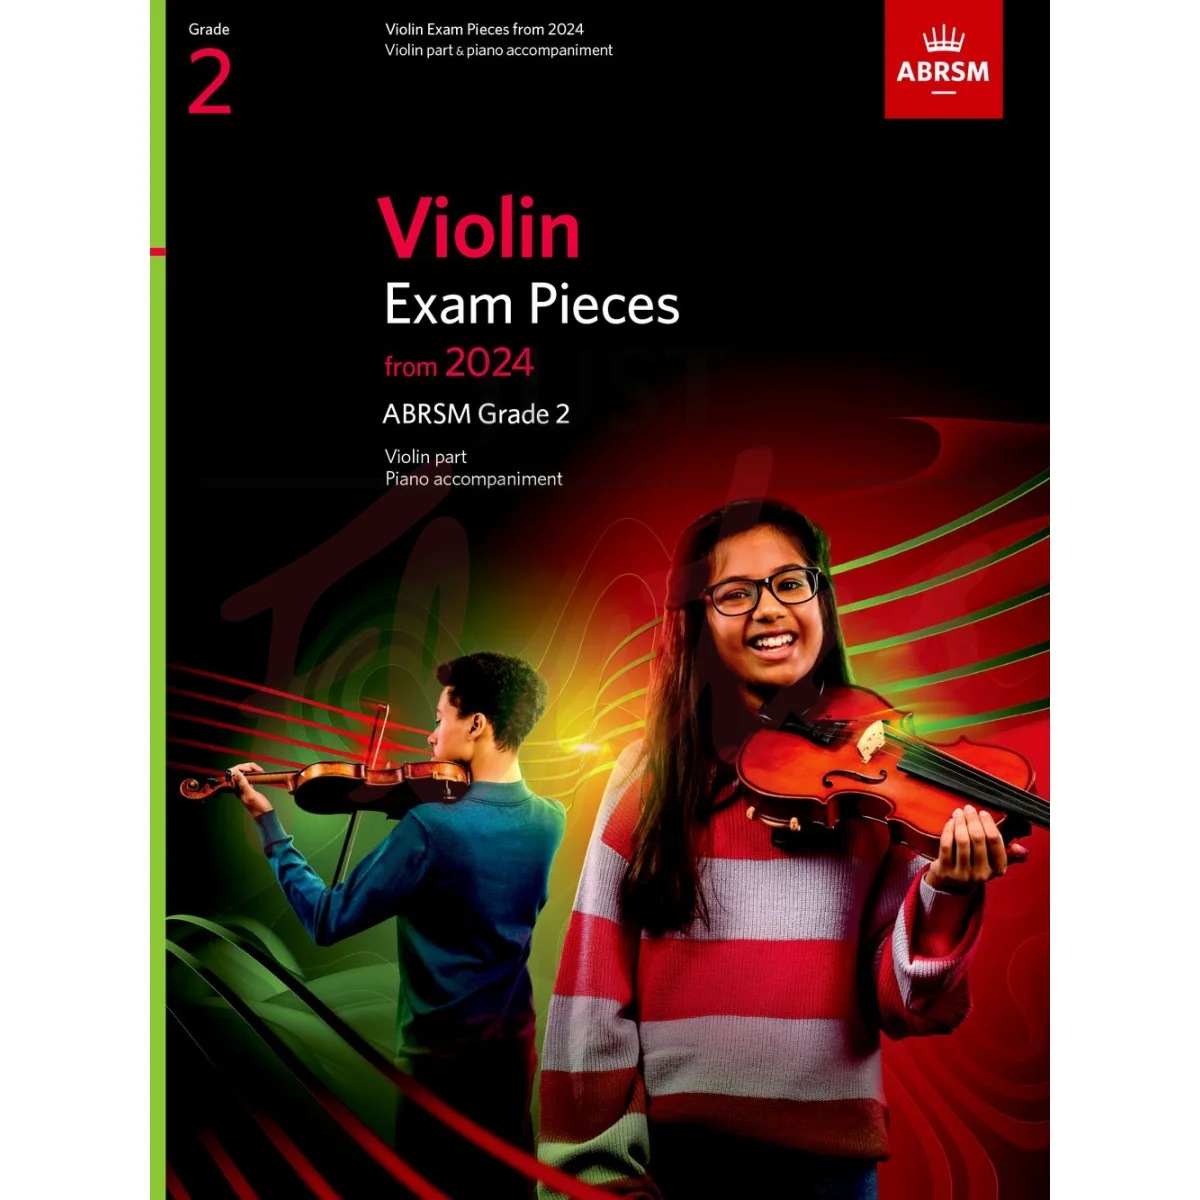 Violin Exam Pieces from 2024, Grade 2